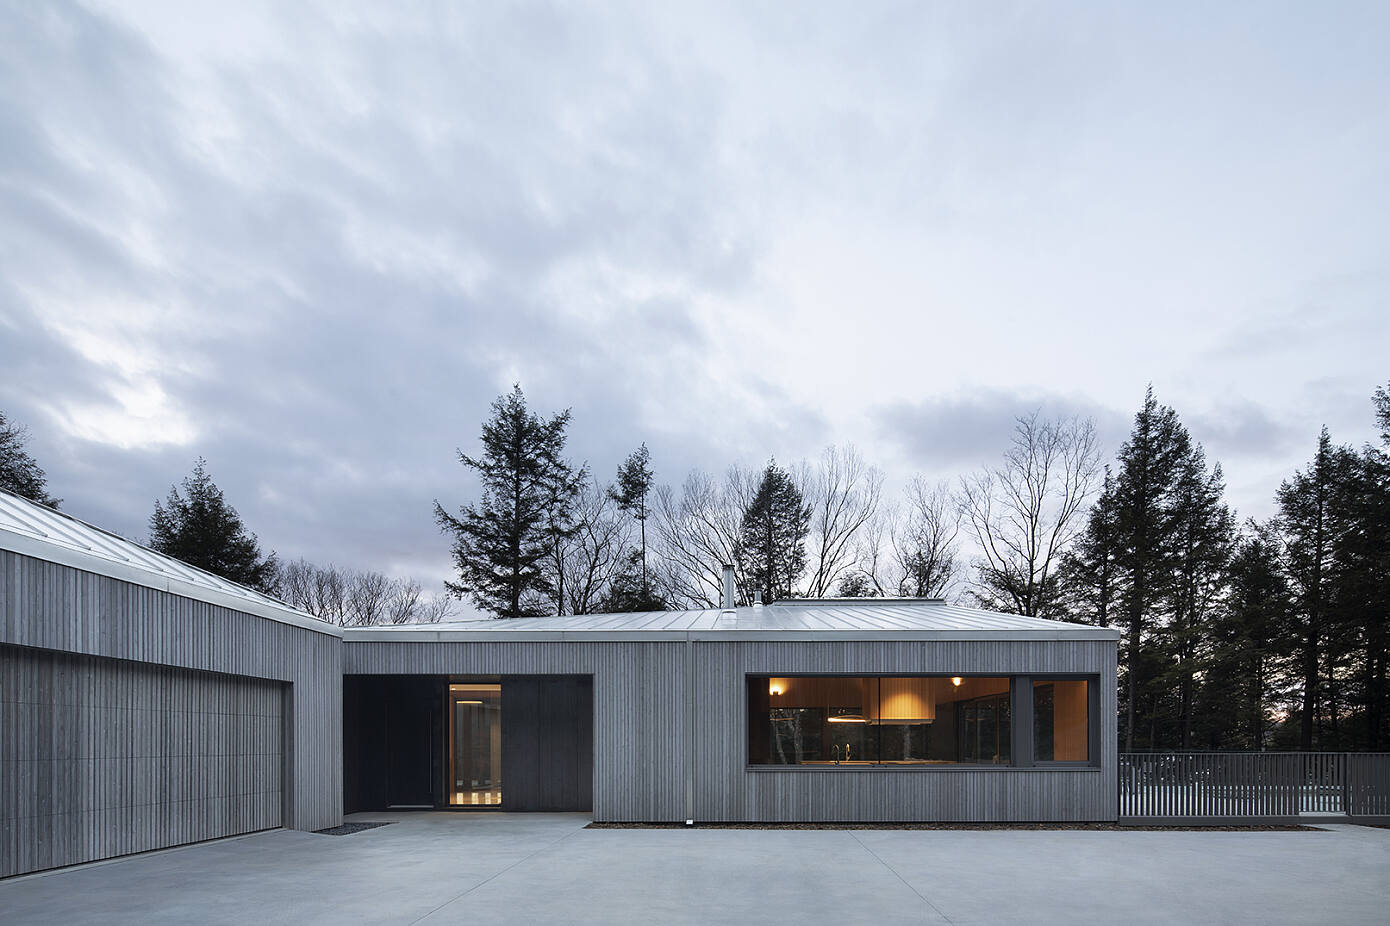 Memphremagog Lake House by Naturehumaine [architecture+design]